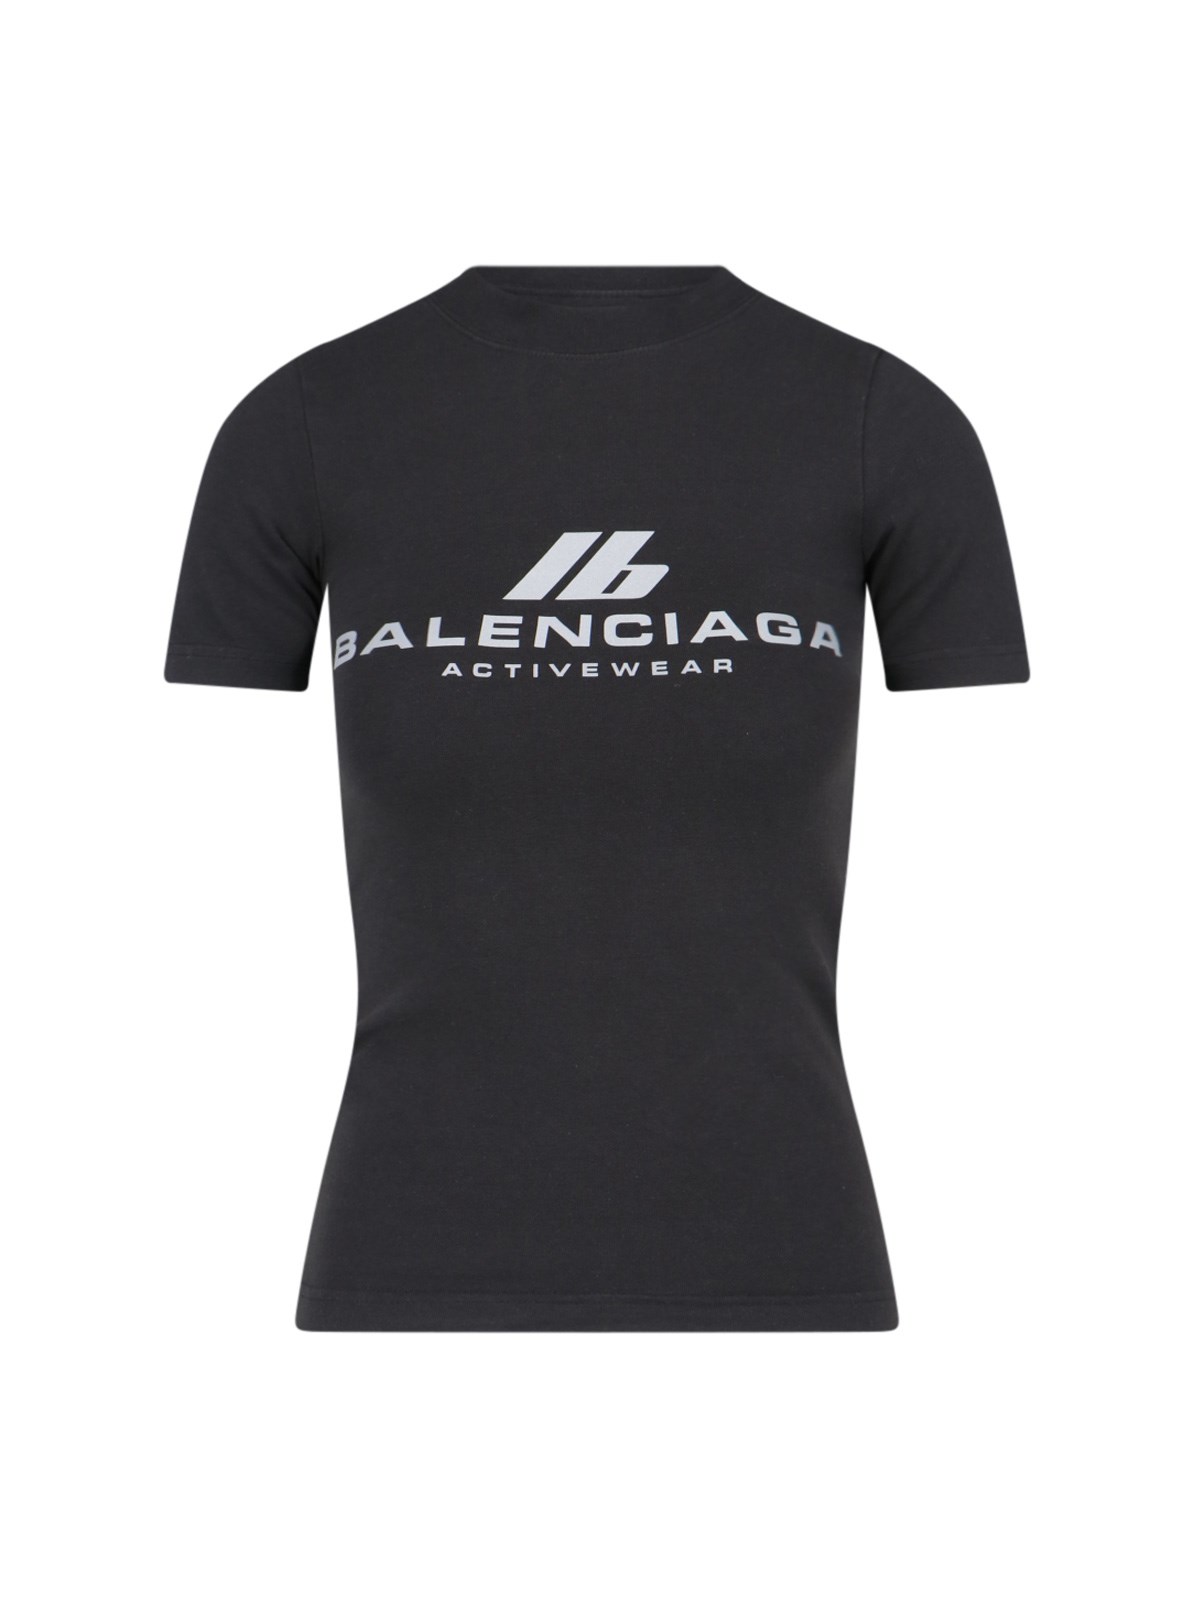 Balenciaga 'activewear' Stretch Jersey T-shirt In Black